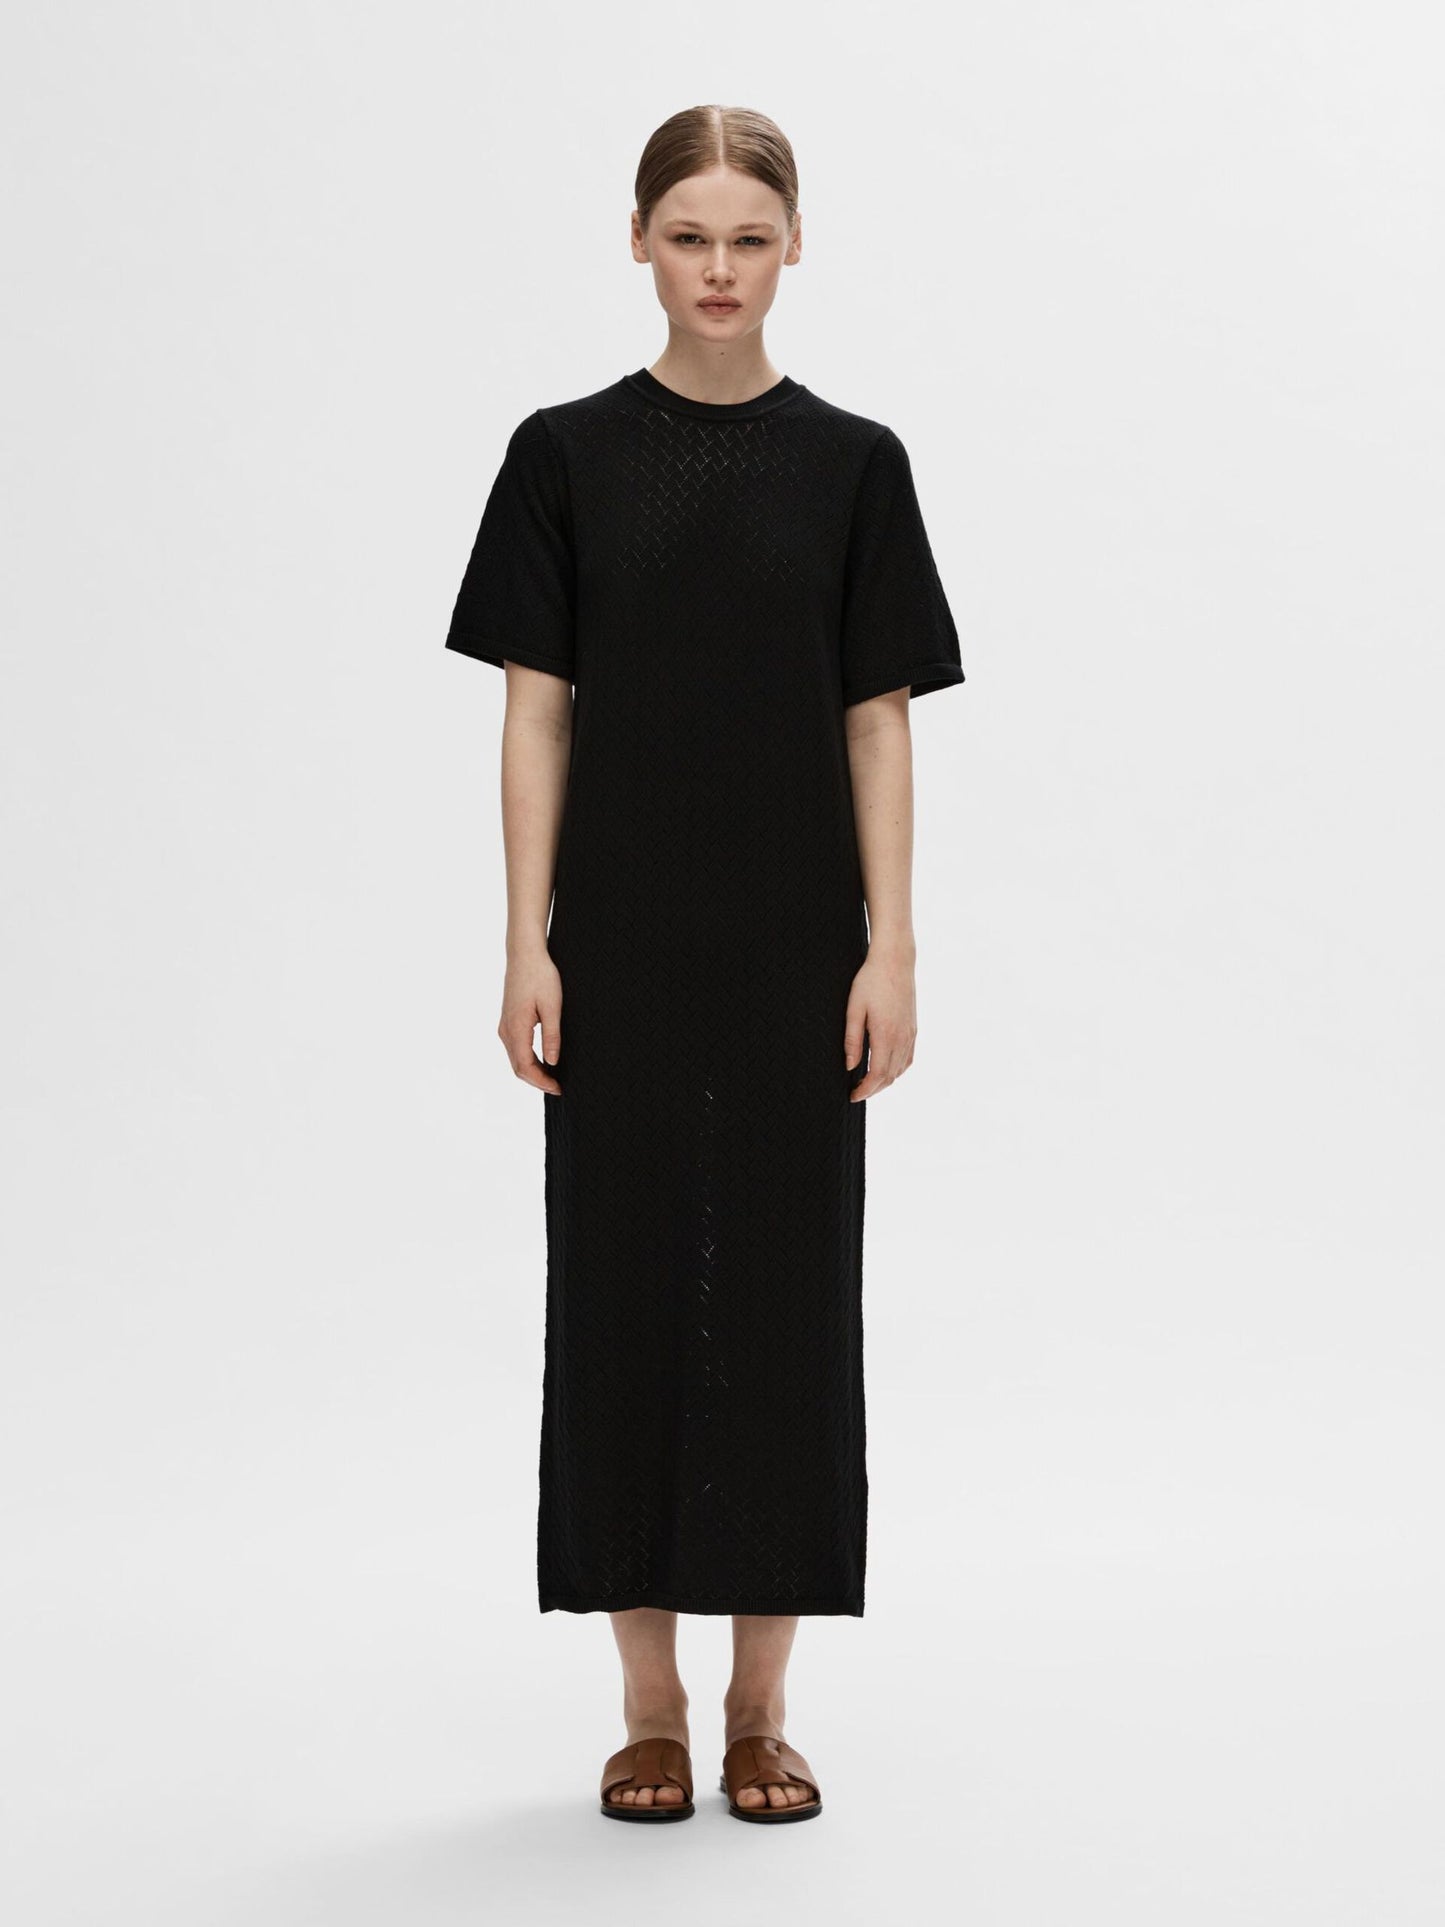 Helena Knit Dress Black